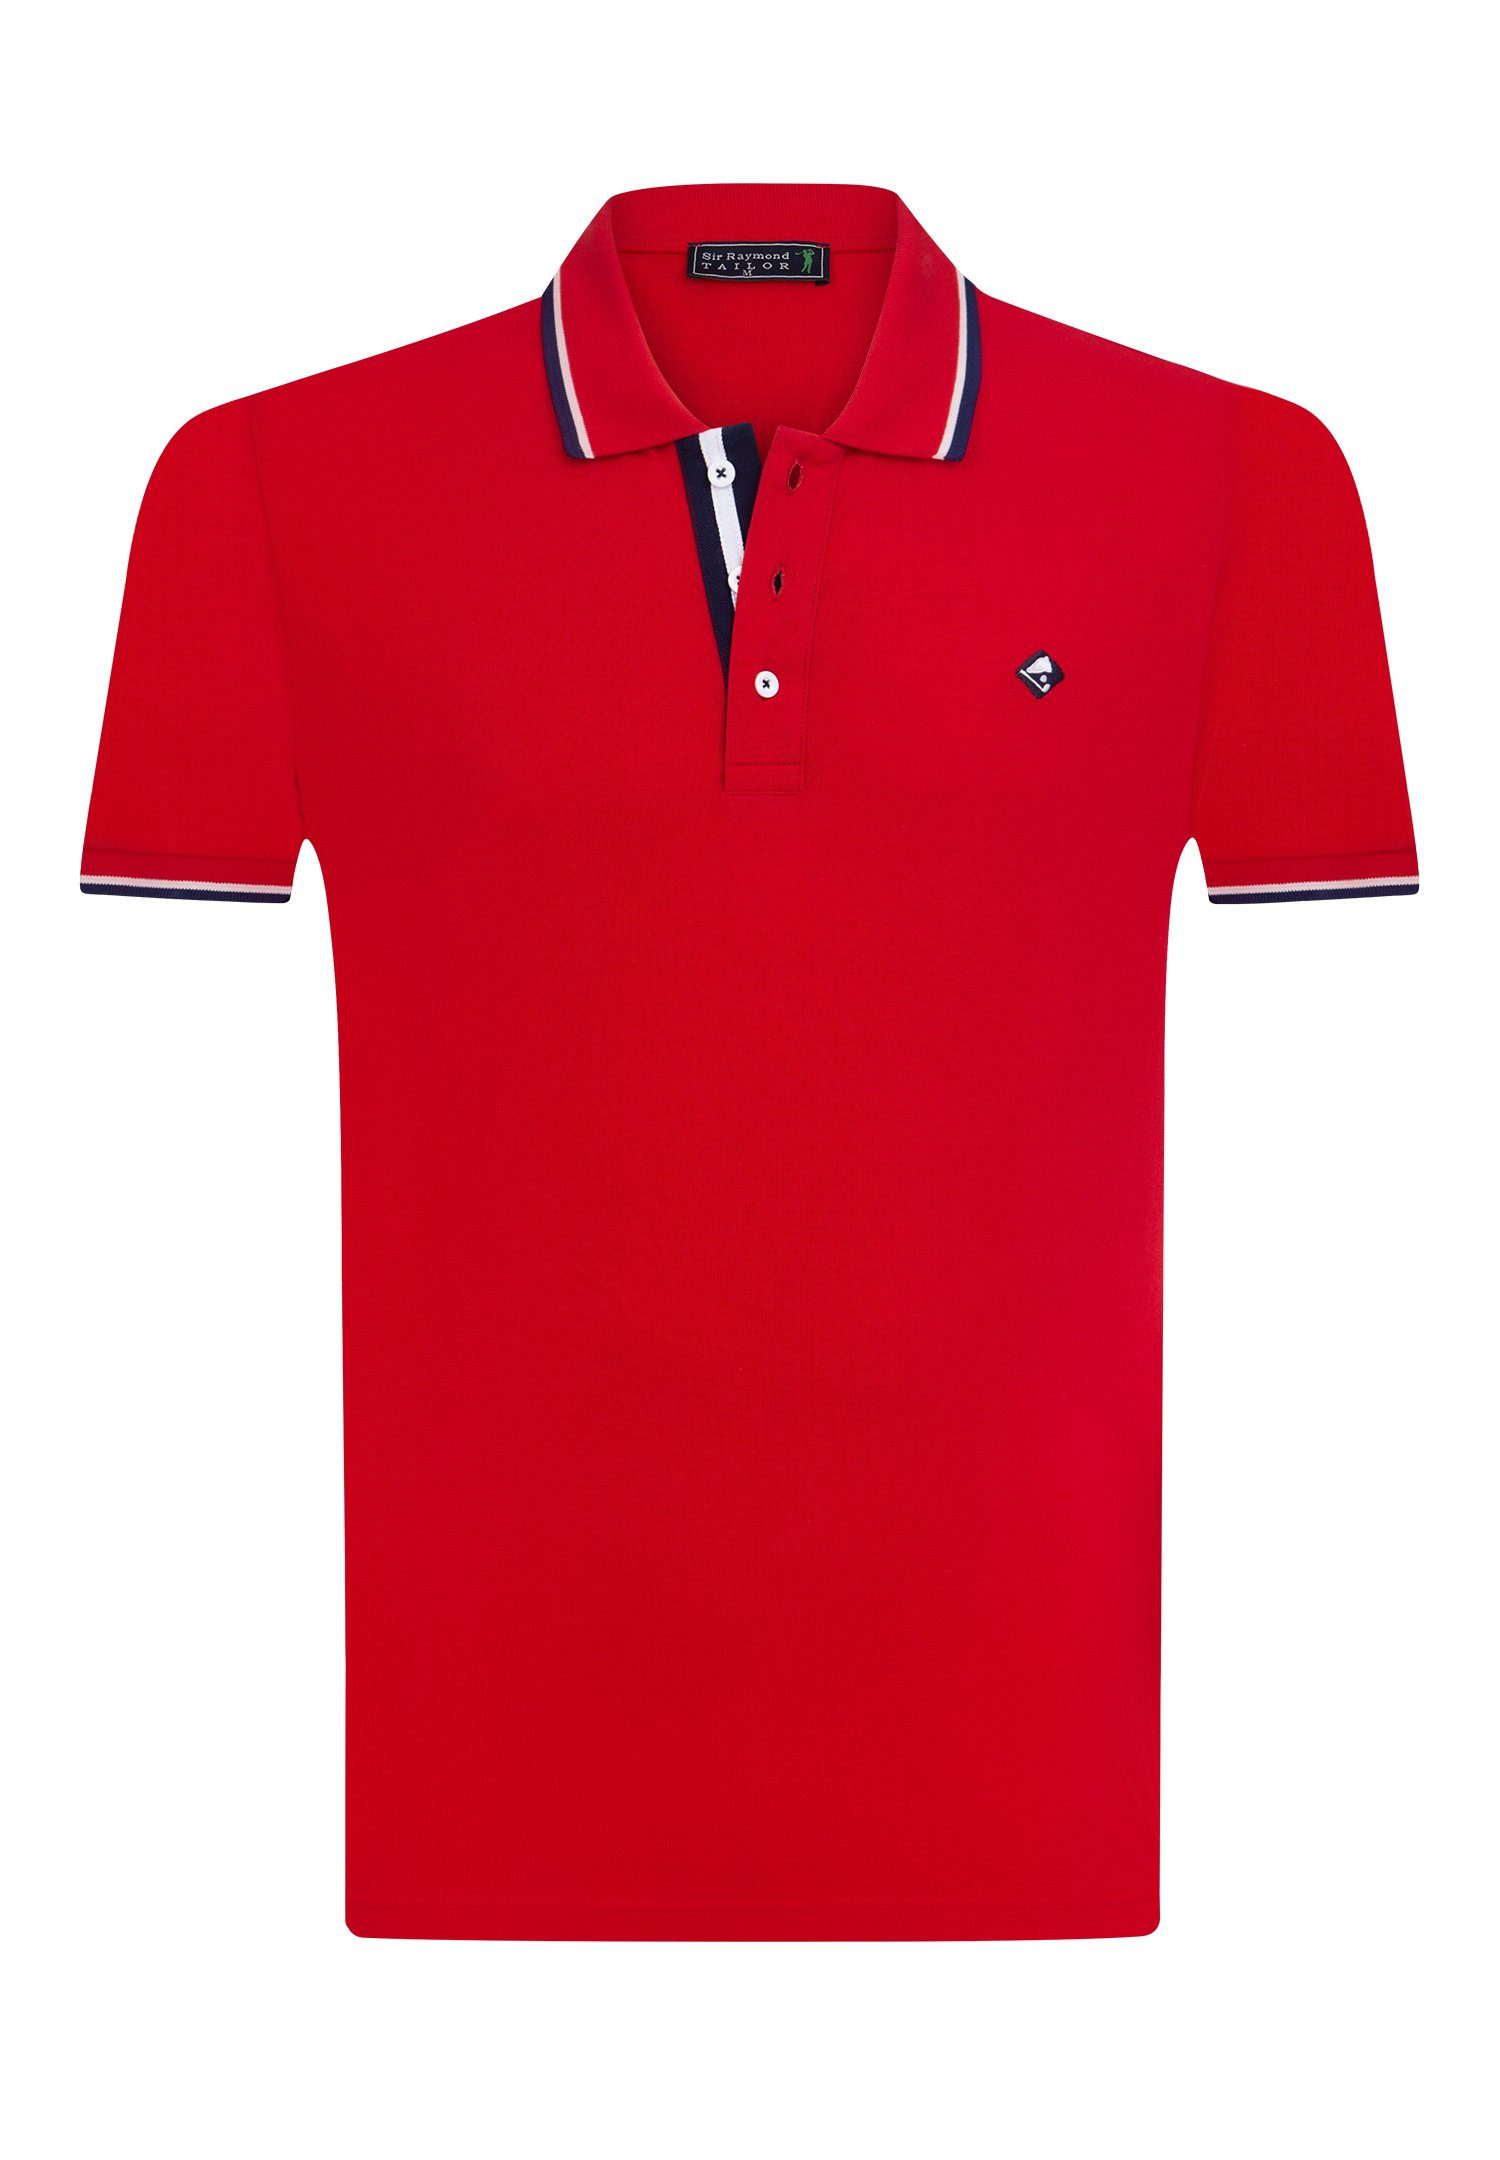 Sir Raymond Tailor Poloshirt Amsterdam Red